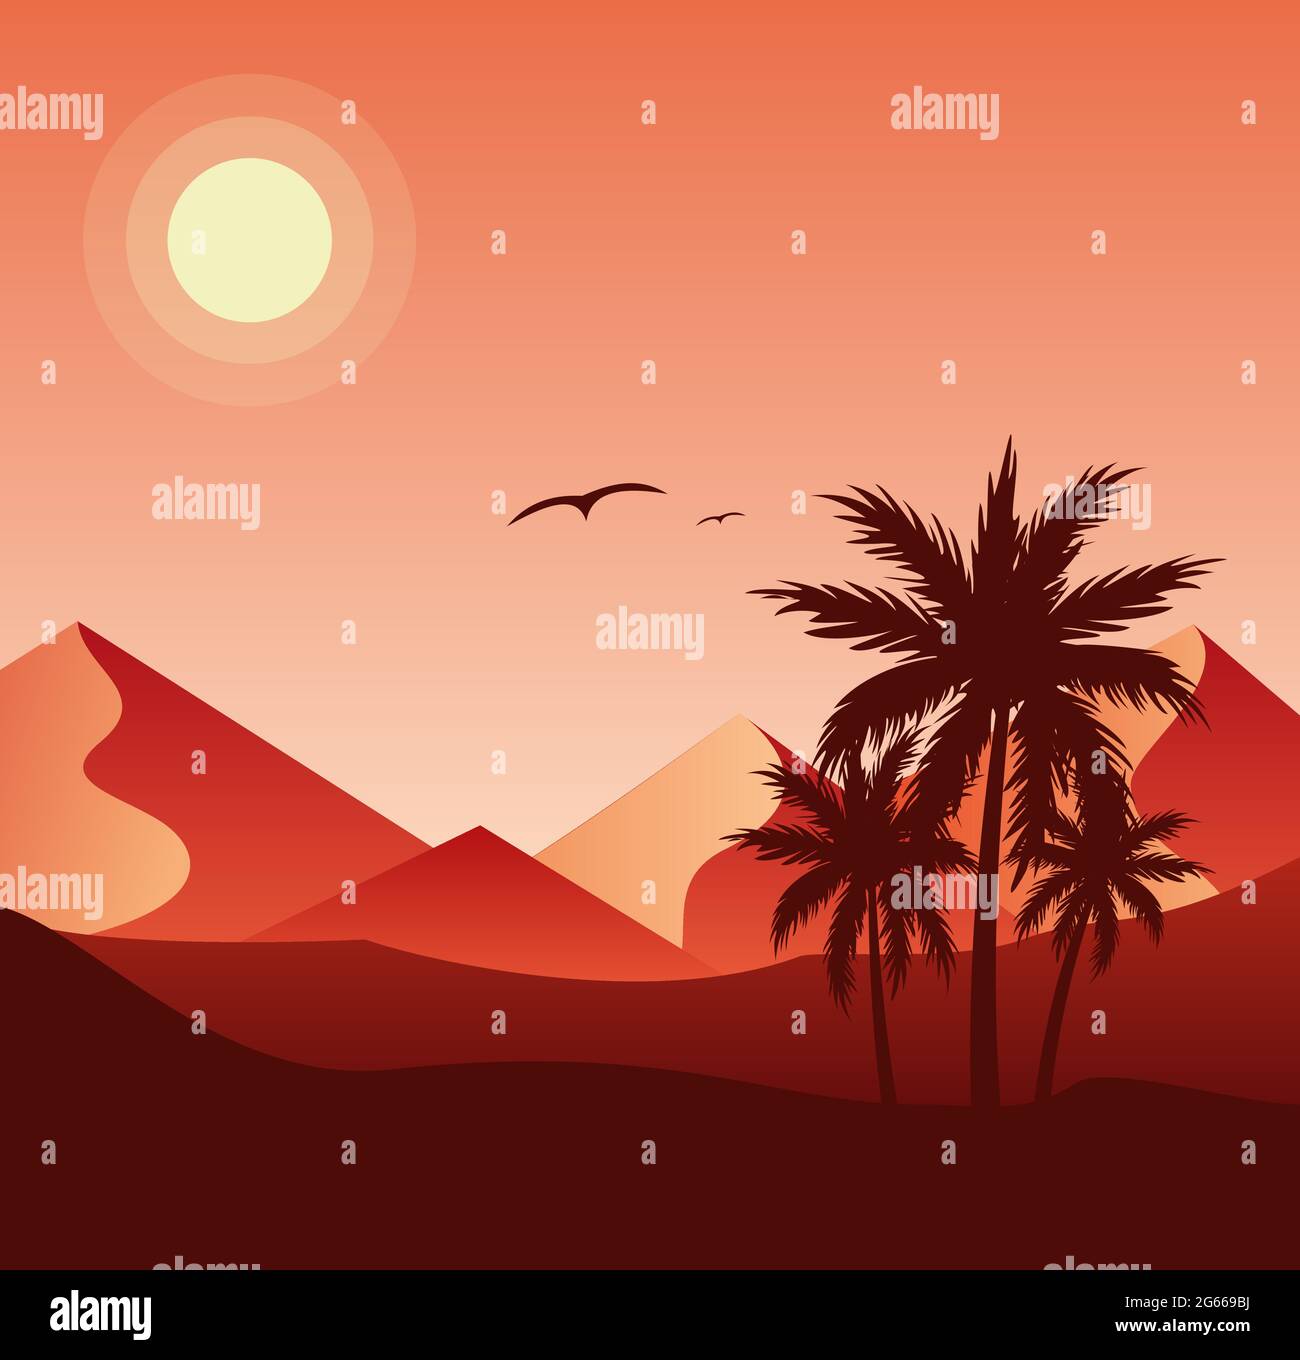 Sonnenuntergang in der Wüste bunte flache Vektor-Illustration Stock Vektor